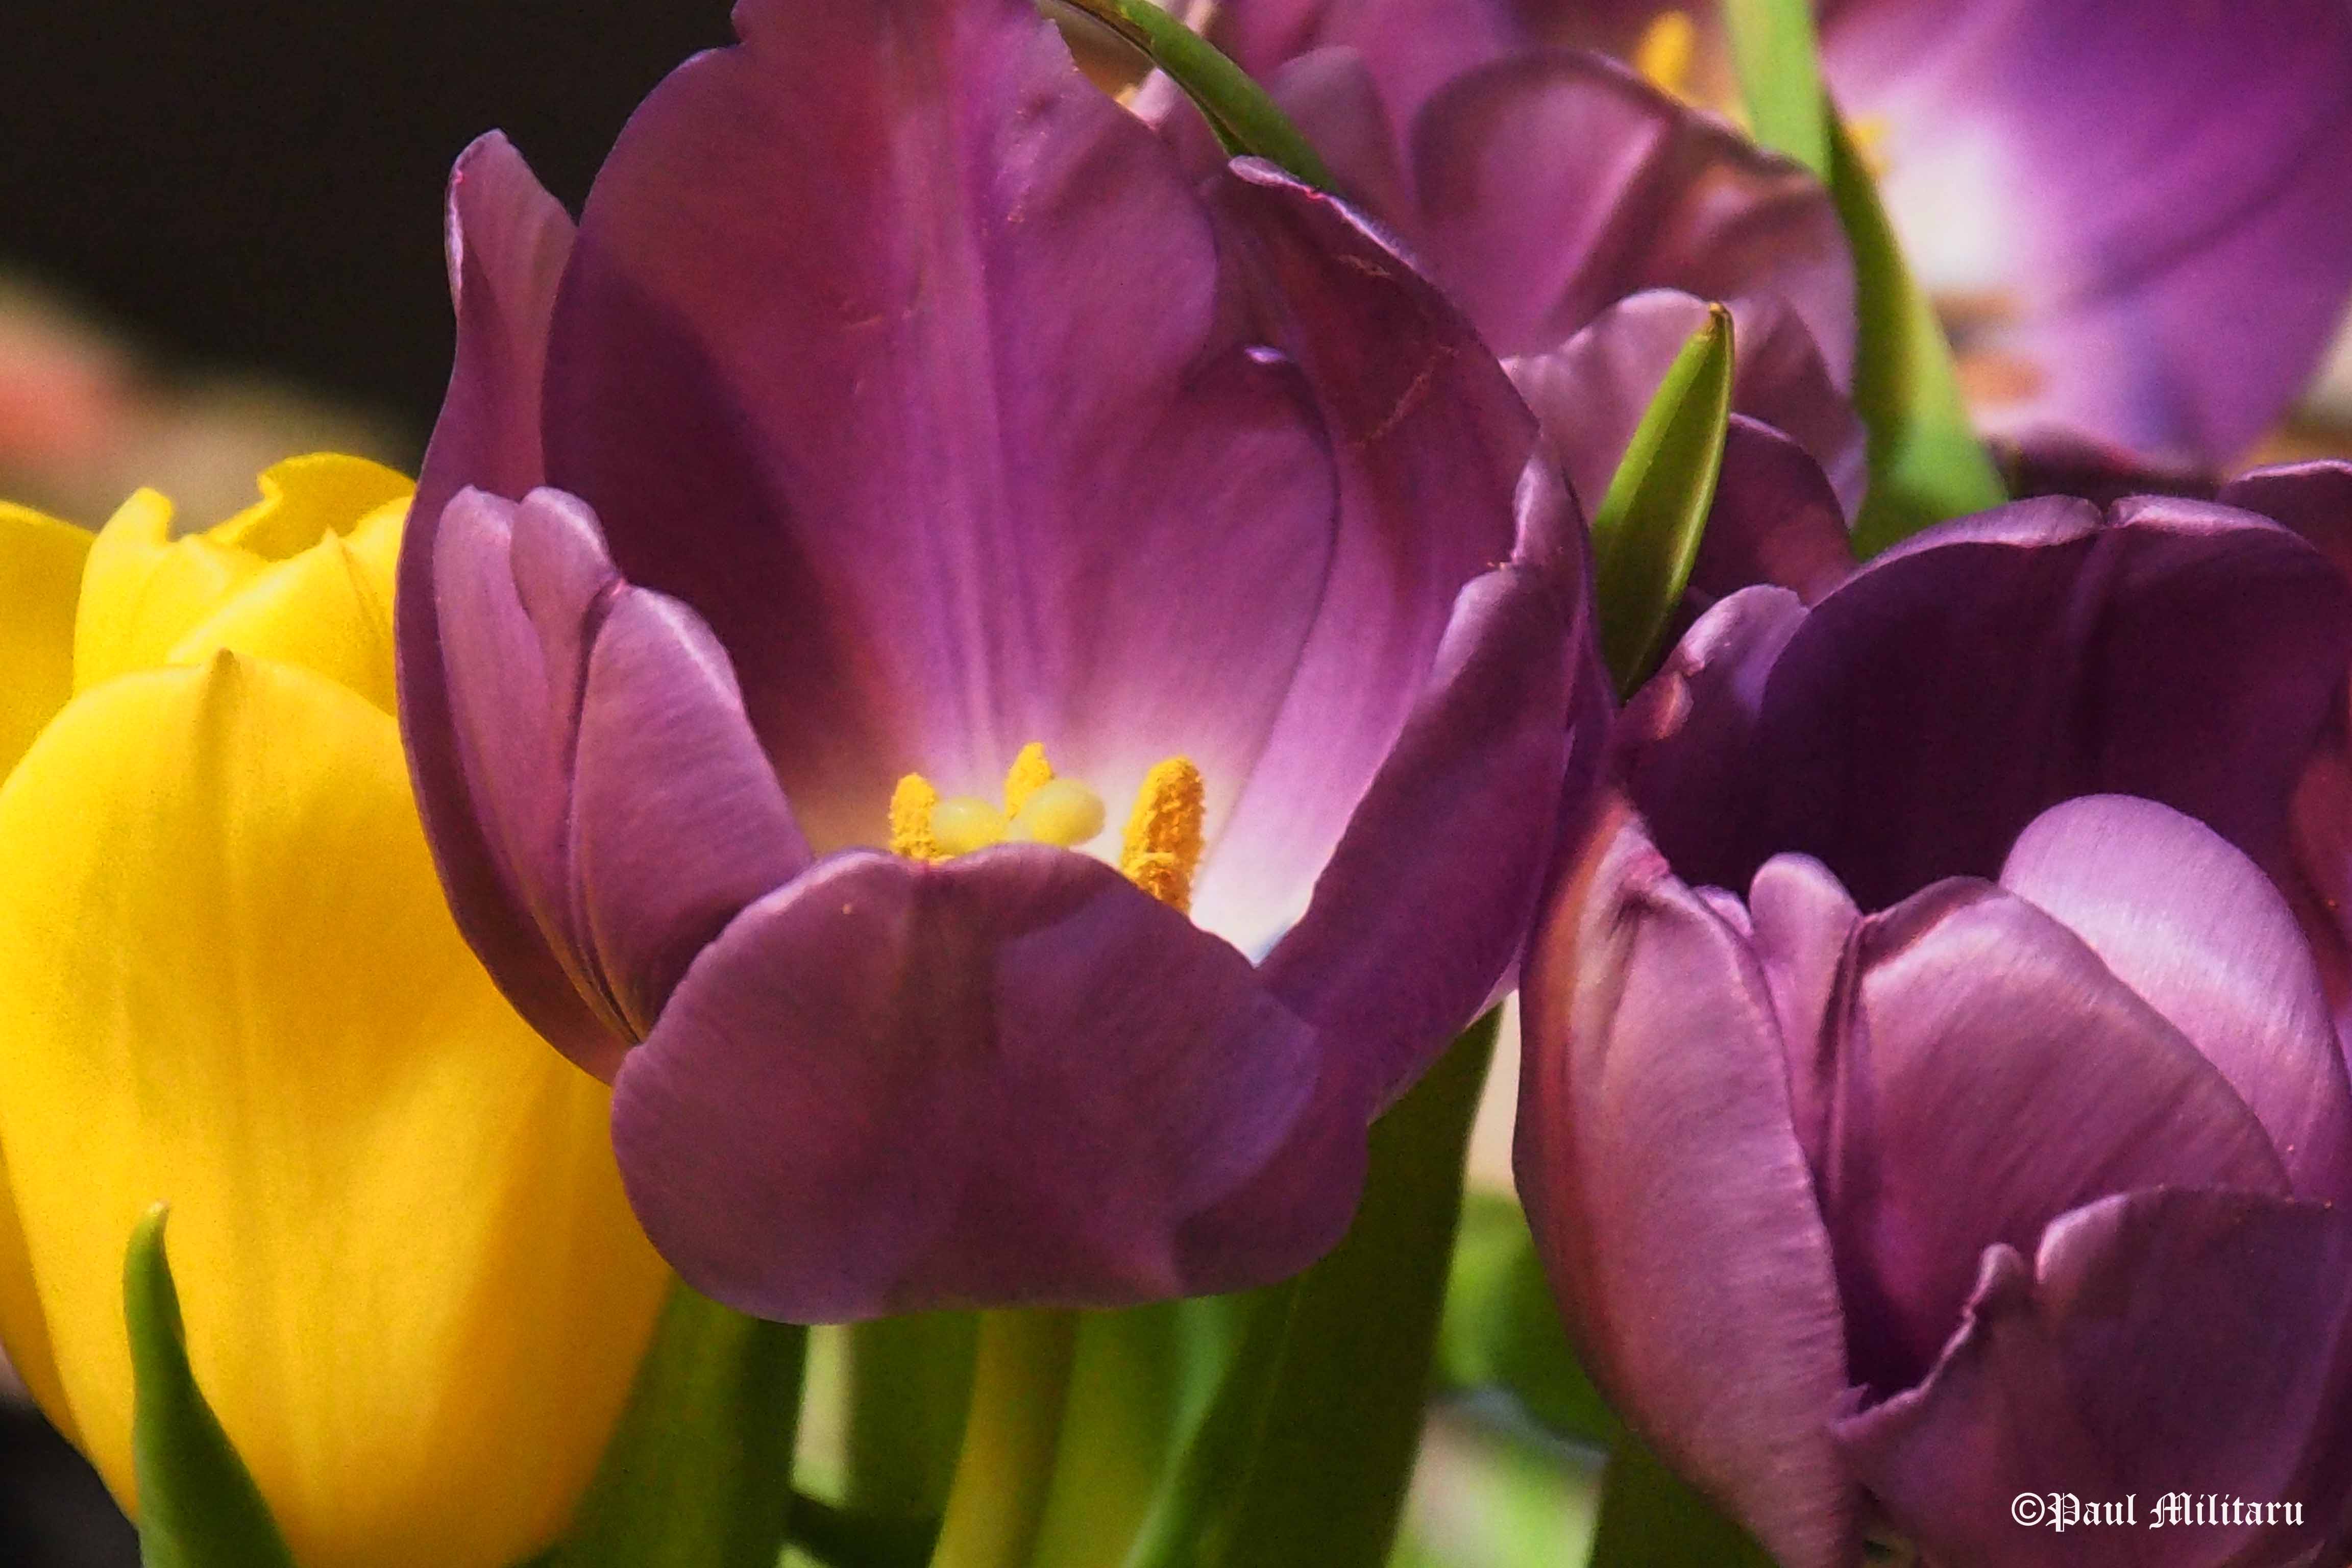 yellow and purple tulips | Paul Militaru